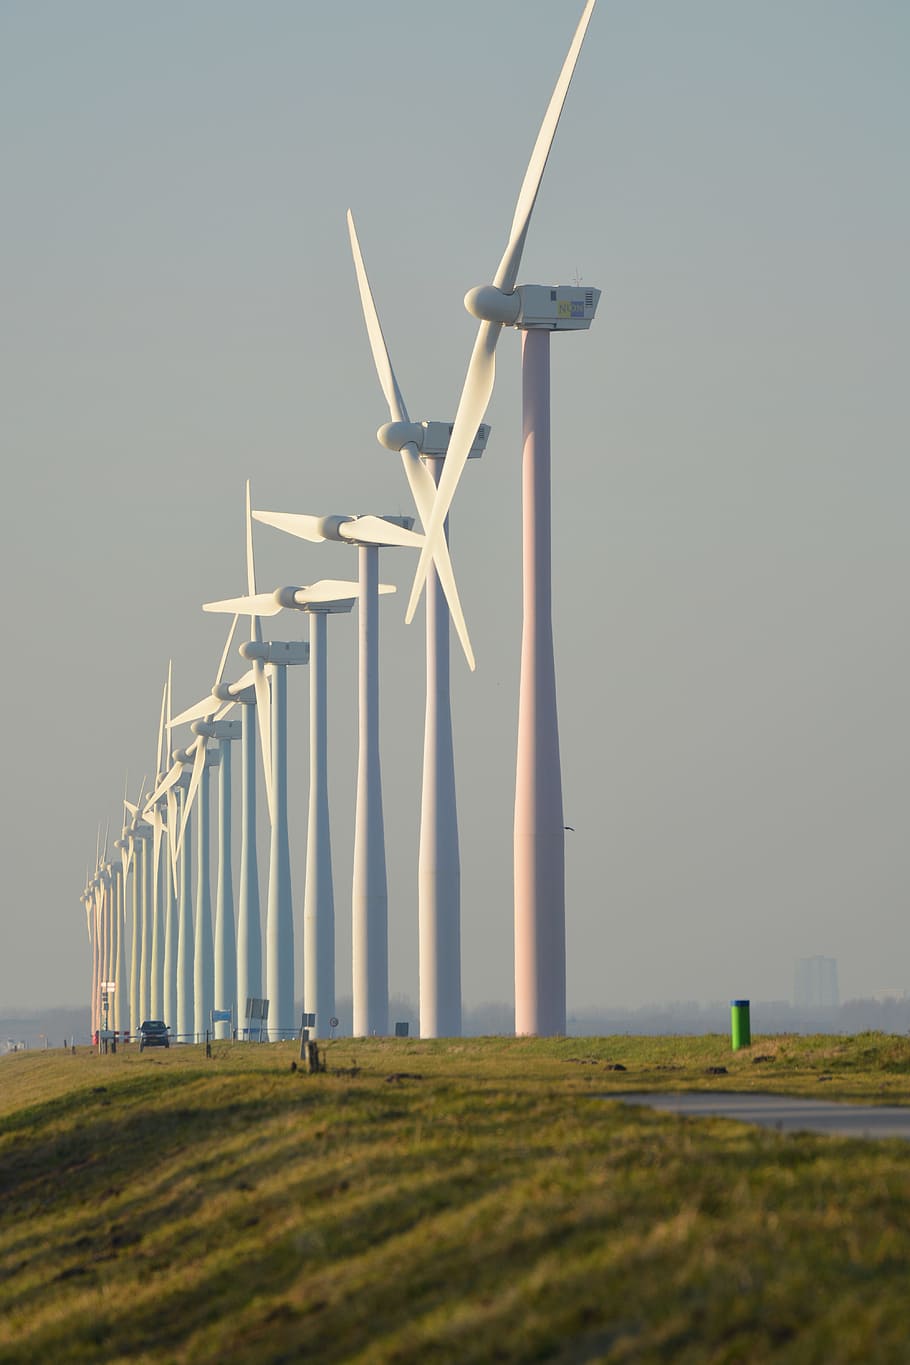 Nature, Windmills, Netherlands, wind energy, view, wicks, turbine, wind Turbine, environment, fuel and Power Generation